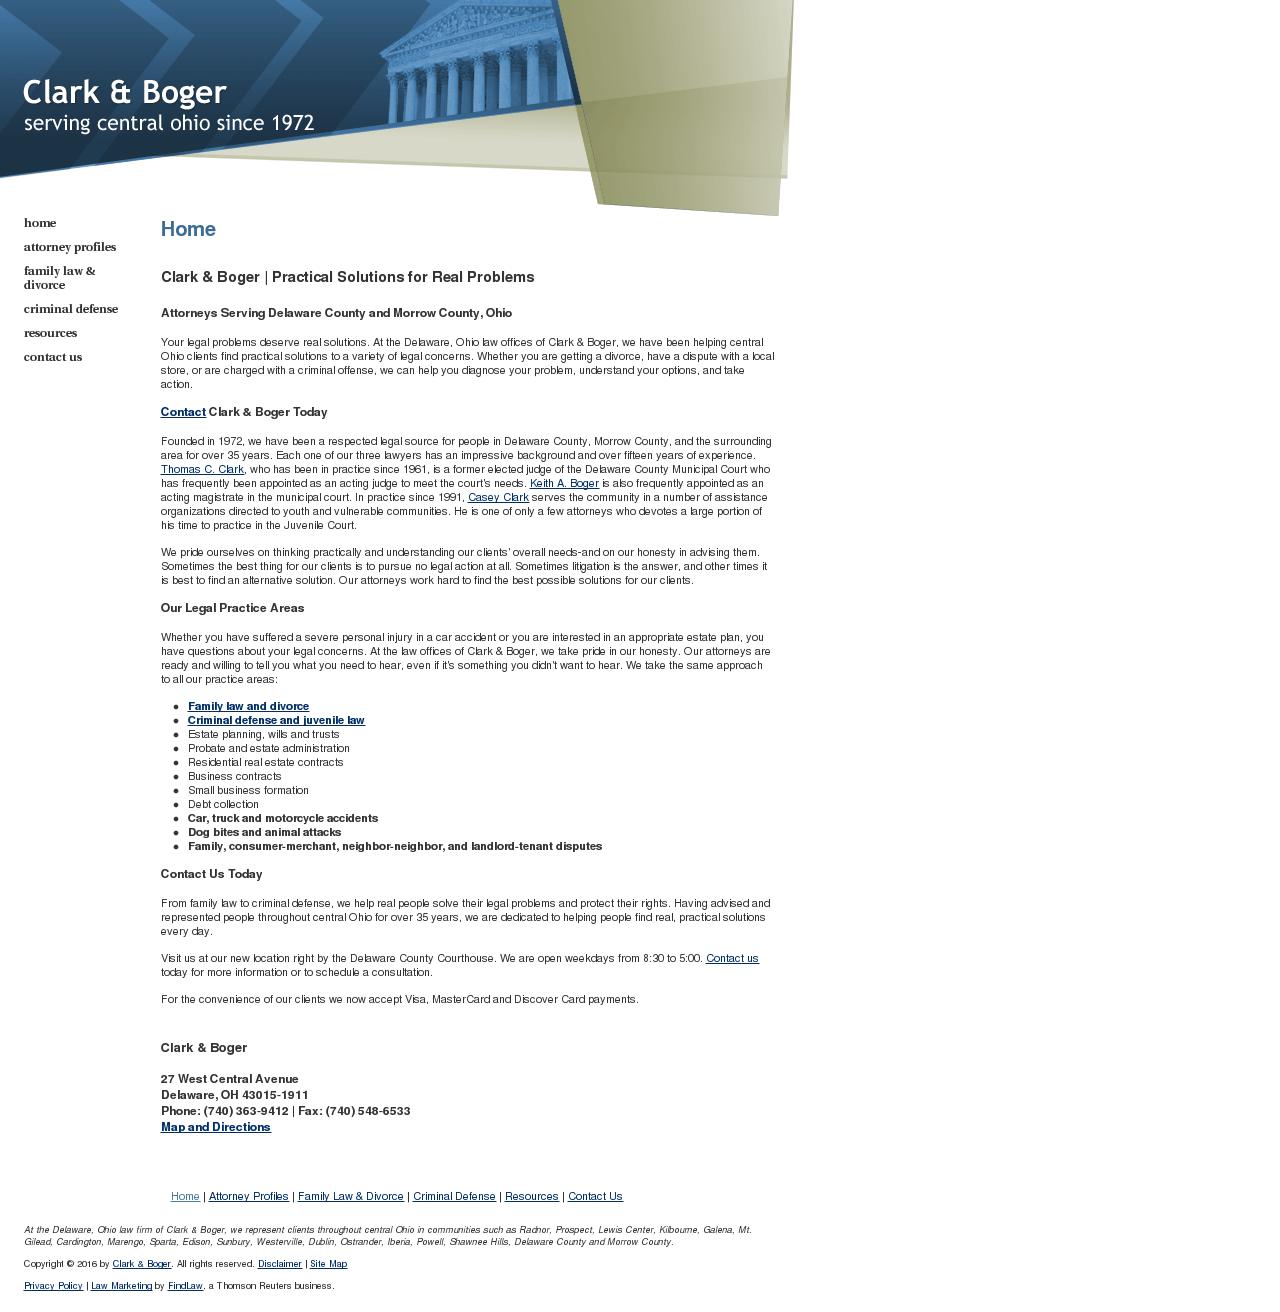 Clark & Boger - Delaware OH Lawyers